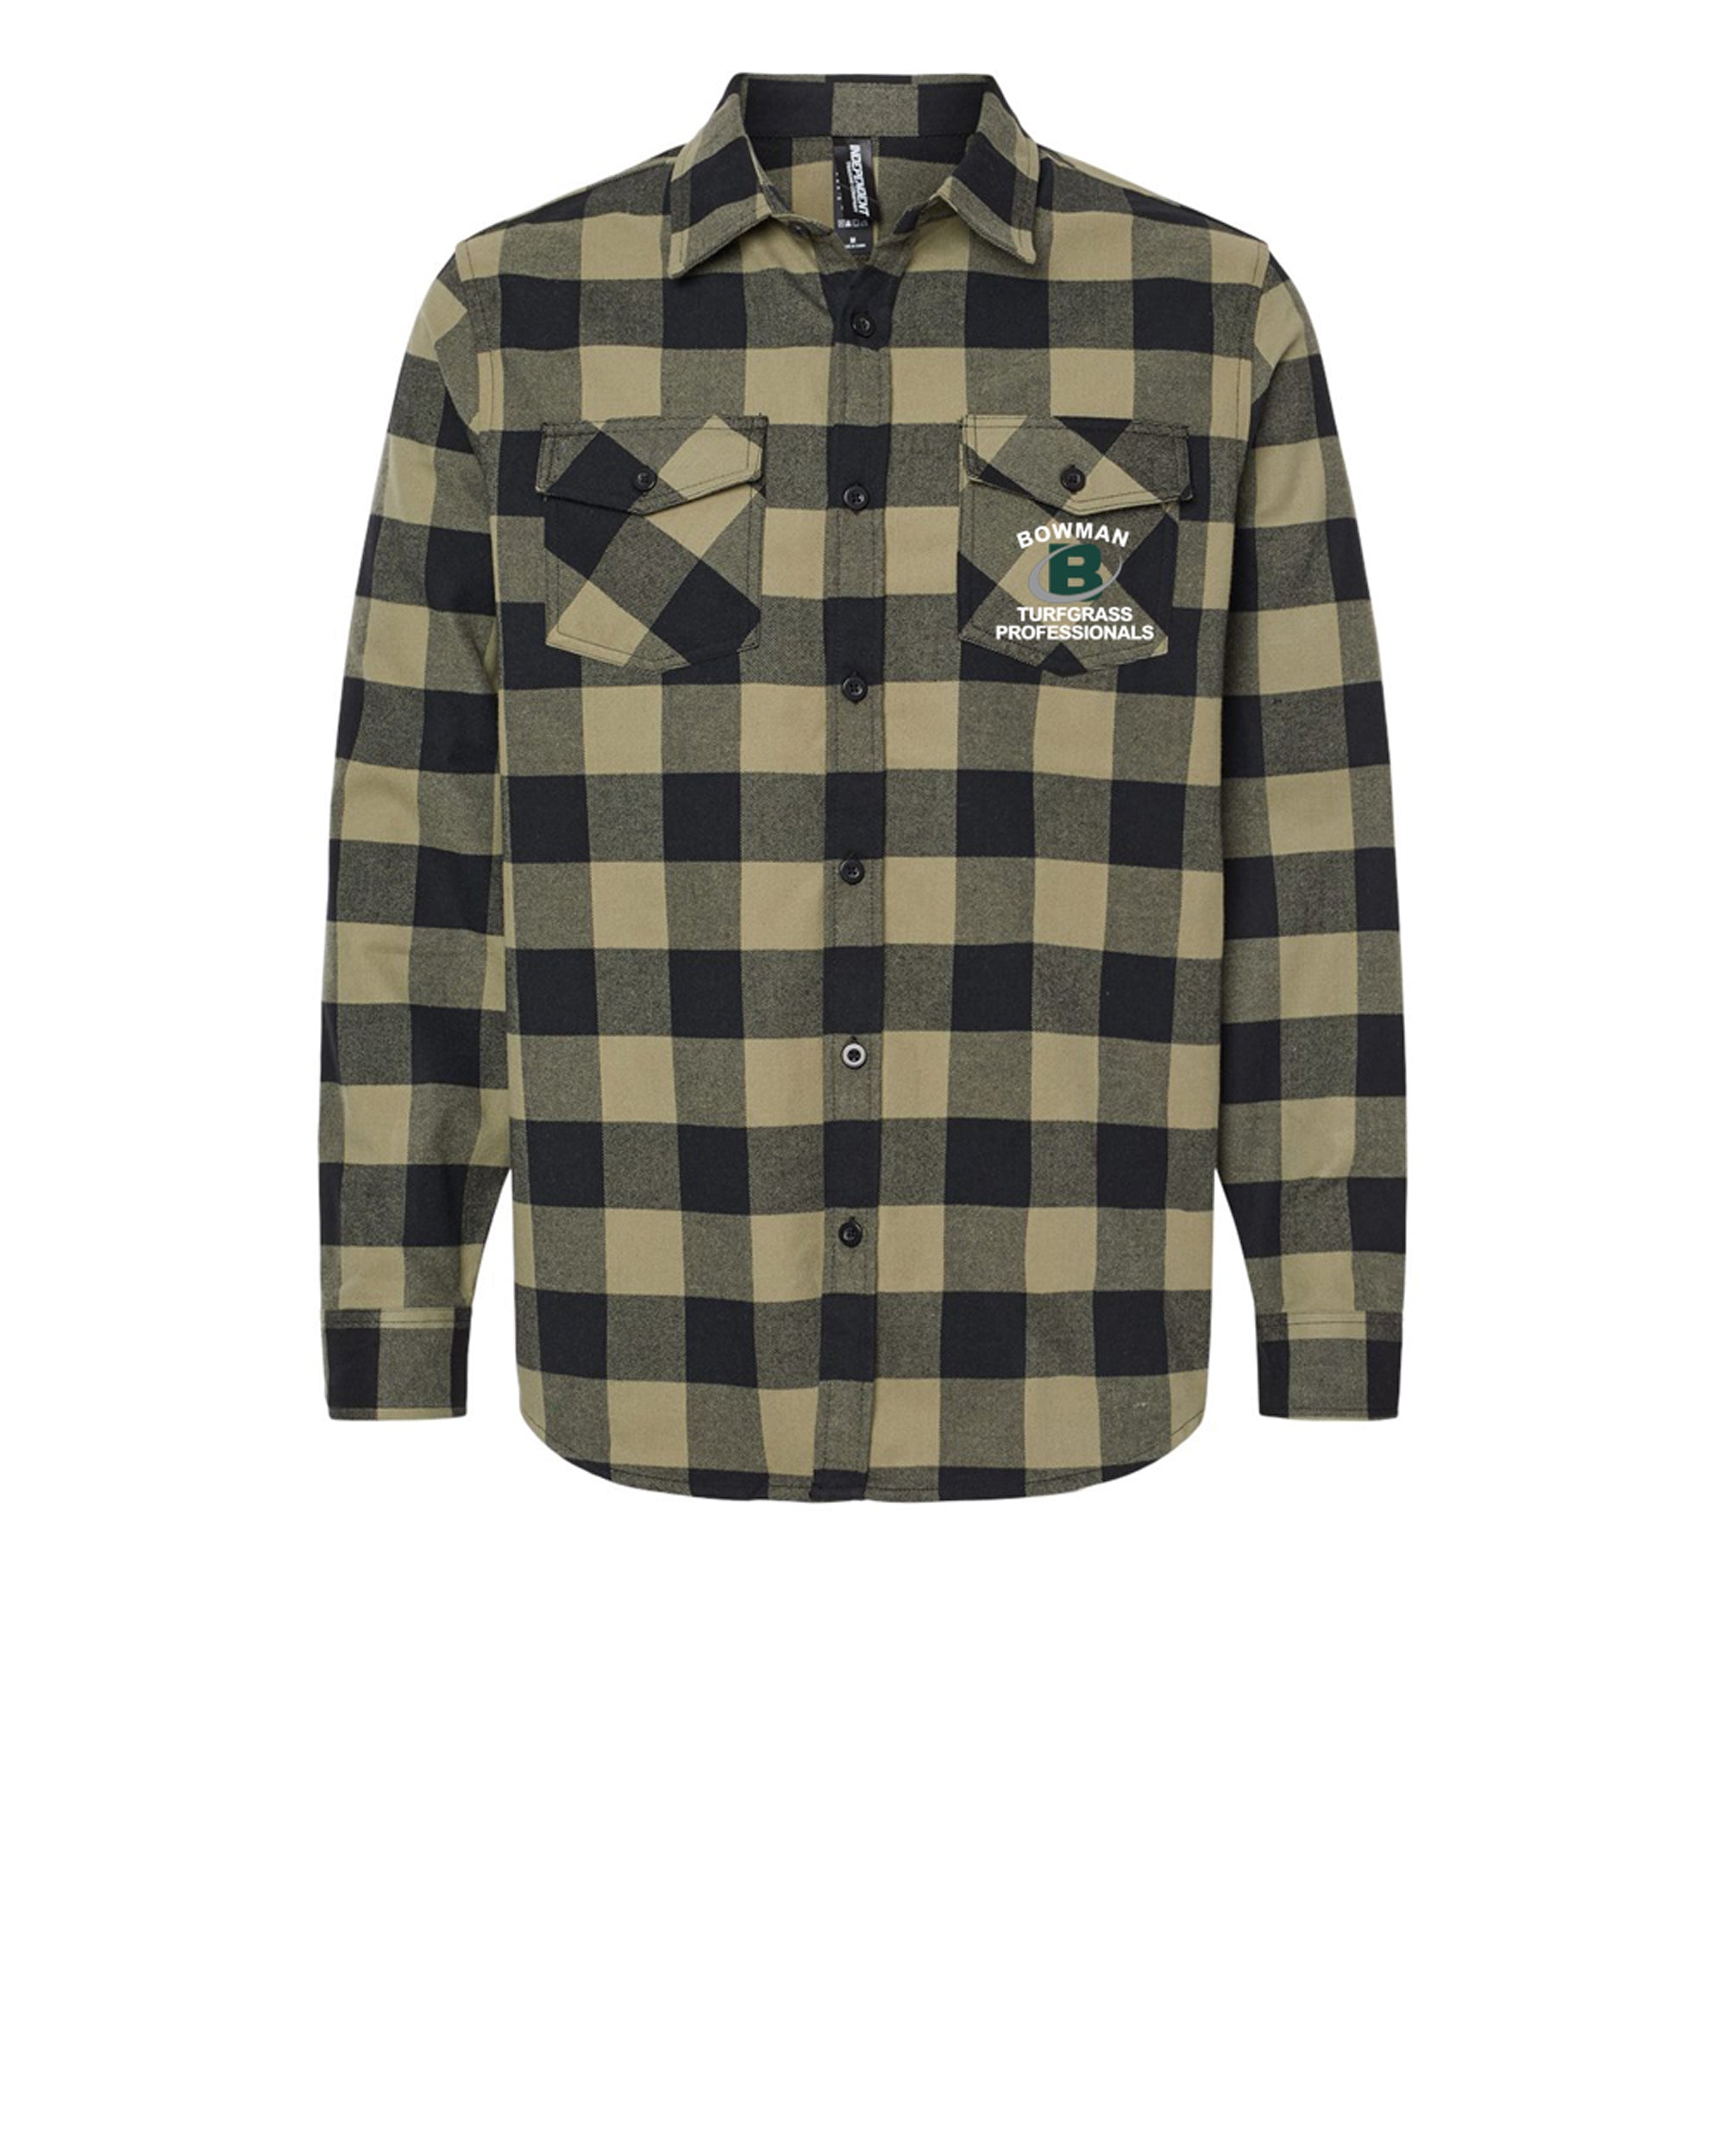 Bowman Turfgrass Professionals - Flannel Shirt